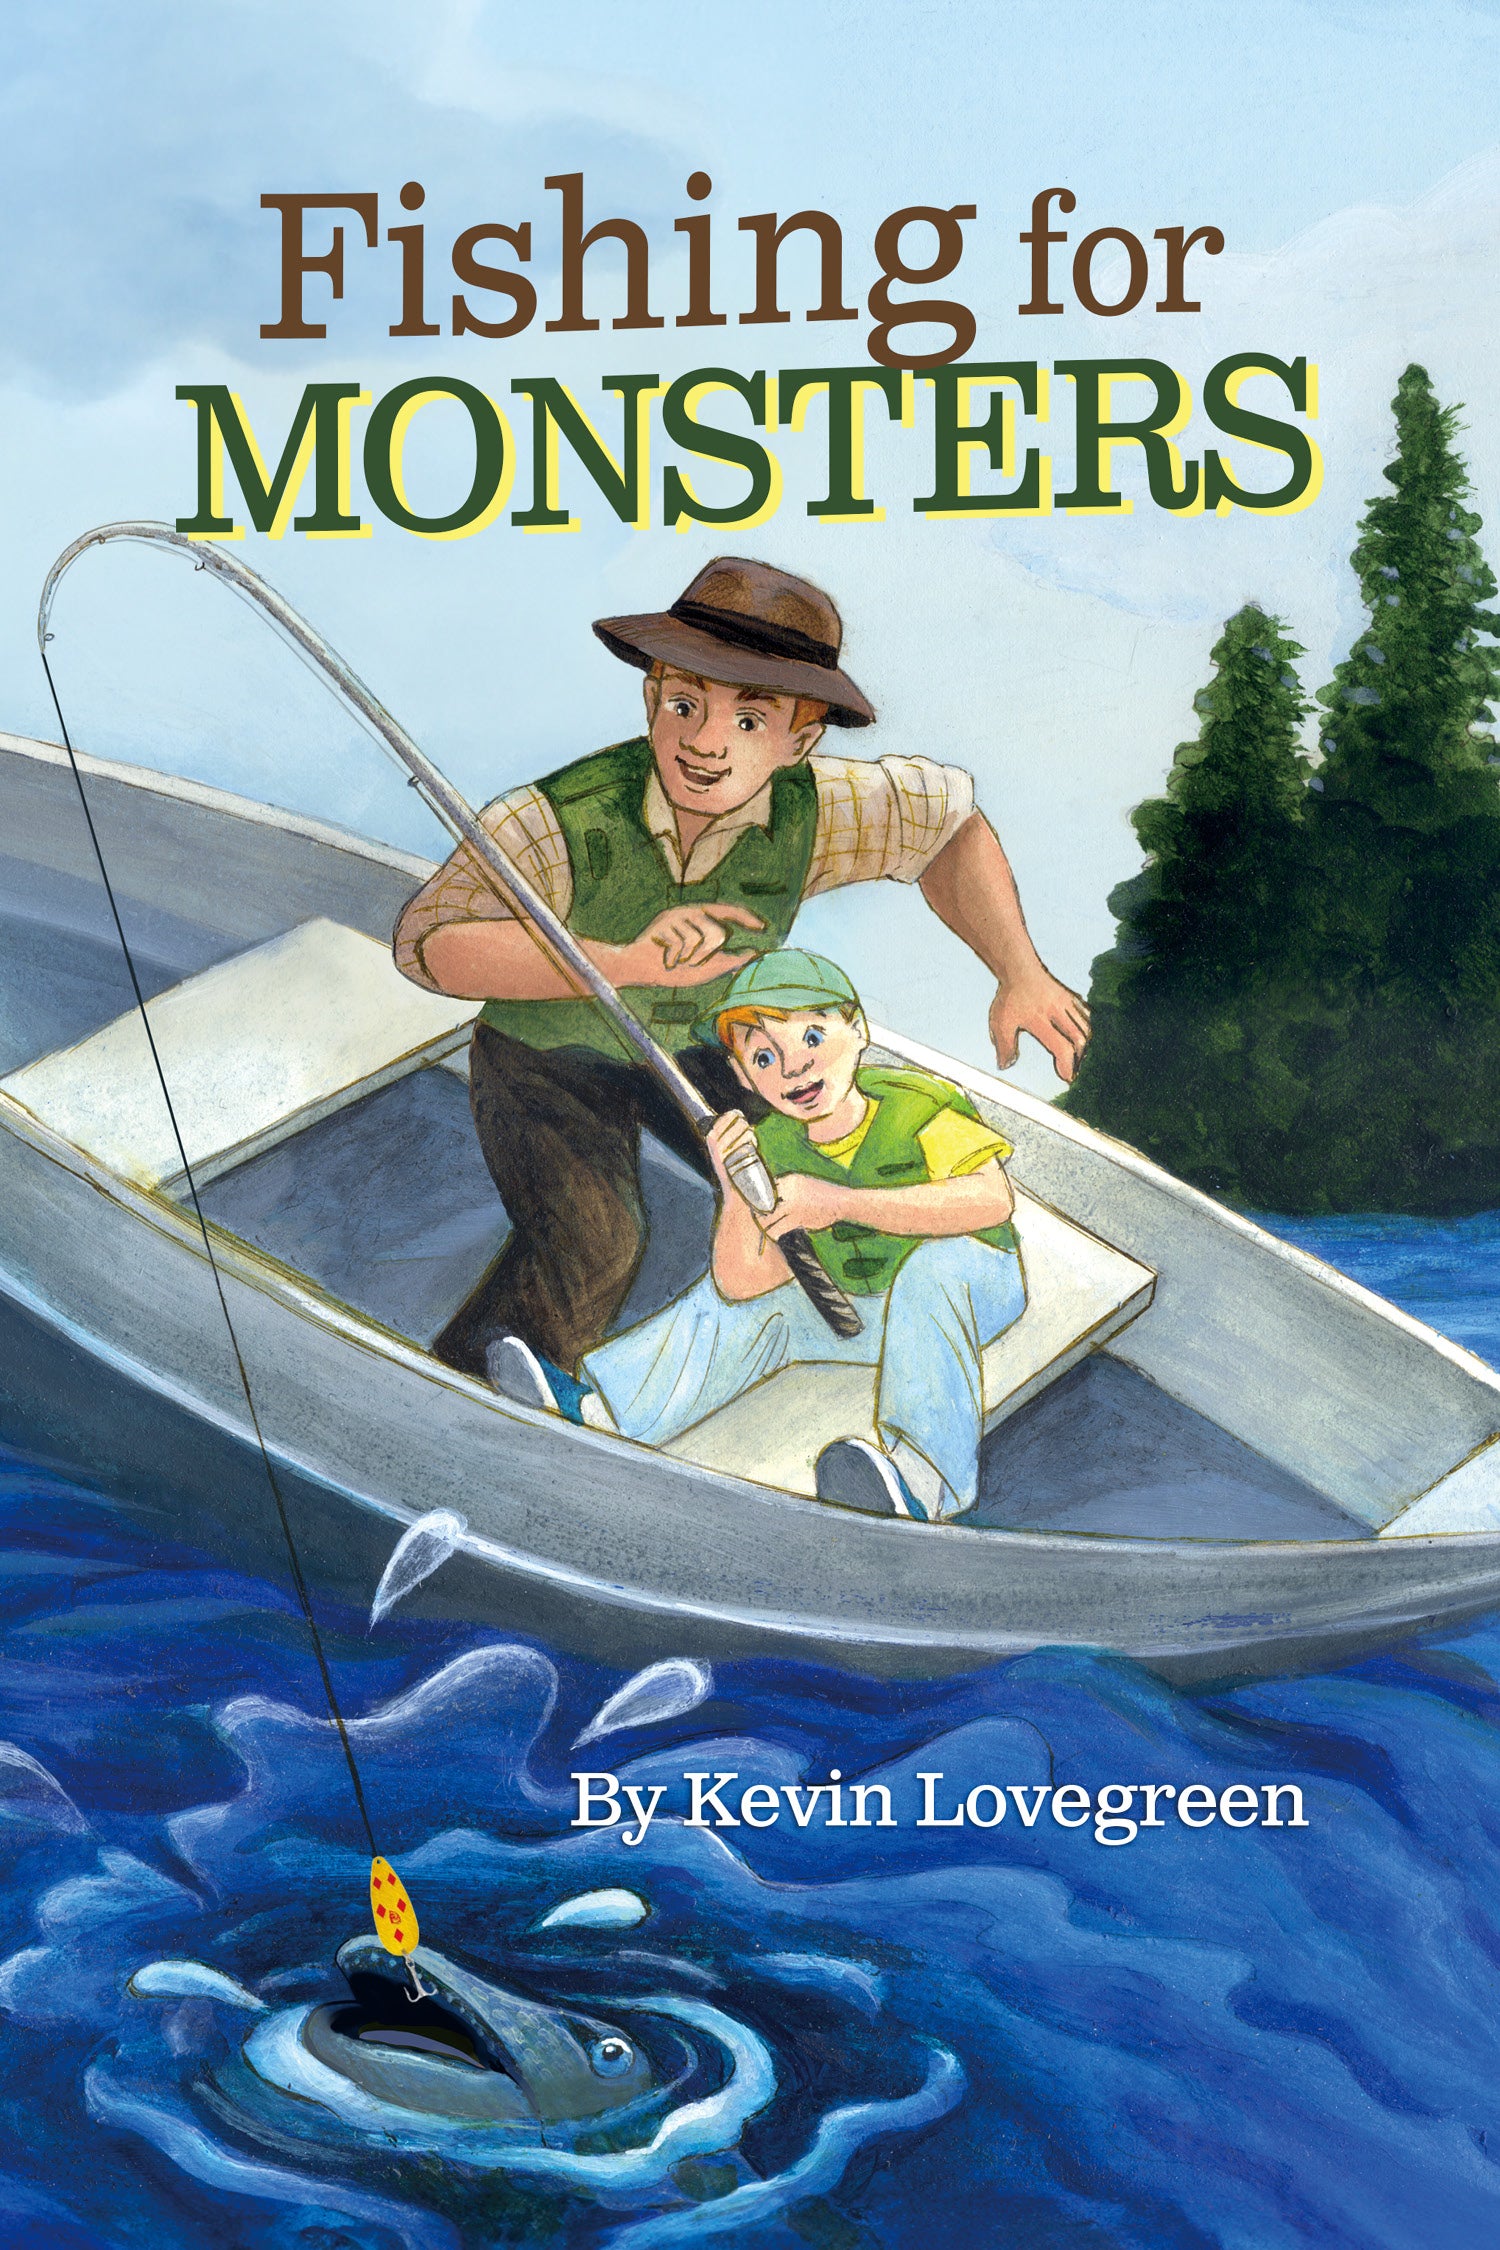 Kevin Lovegreen, Author and Presenter, Minnesota – Kevin Lovegreen